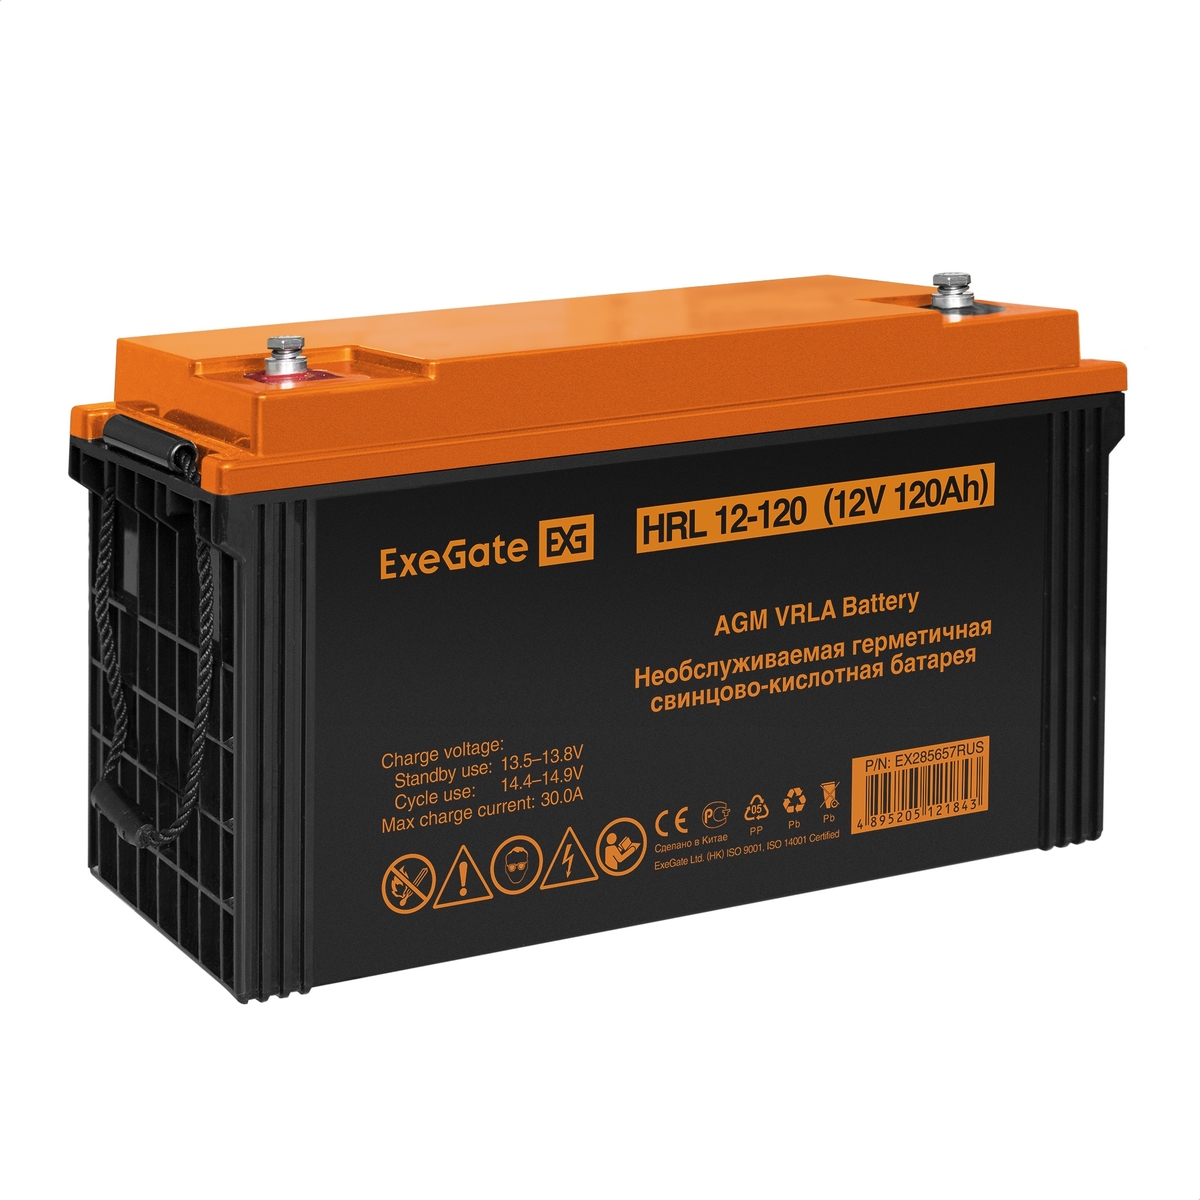 UPS set EX296005 + battery 120Ah EX285657 4 piece